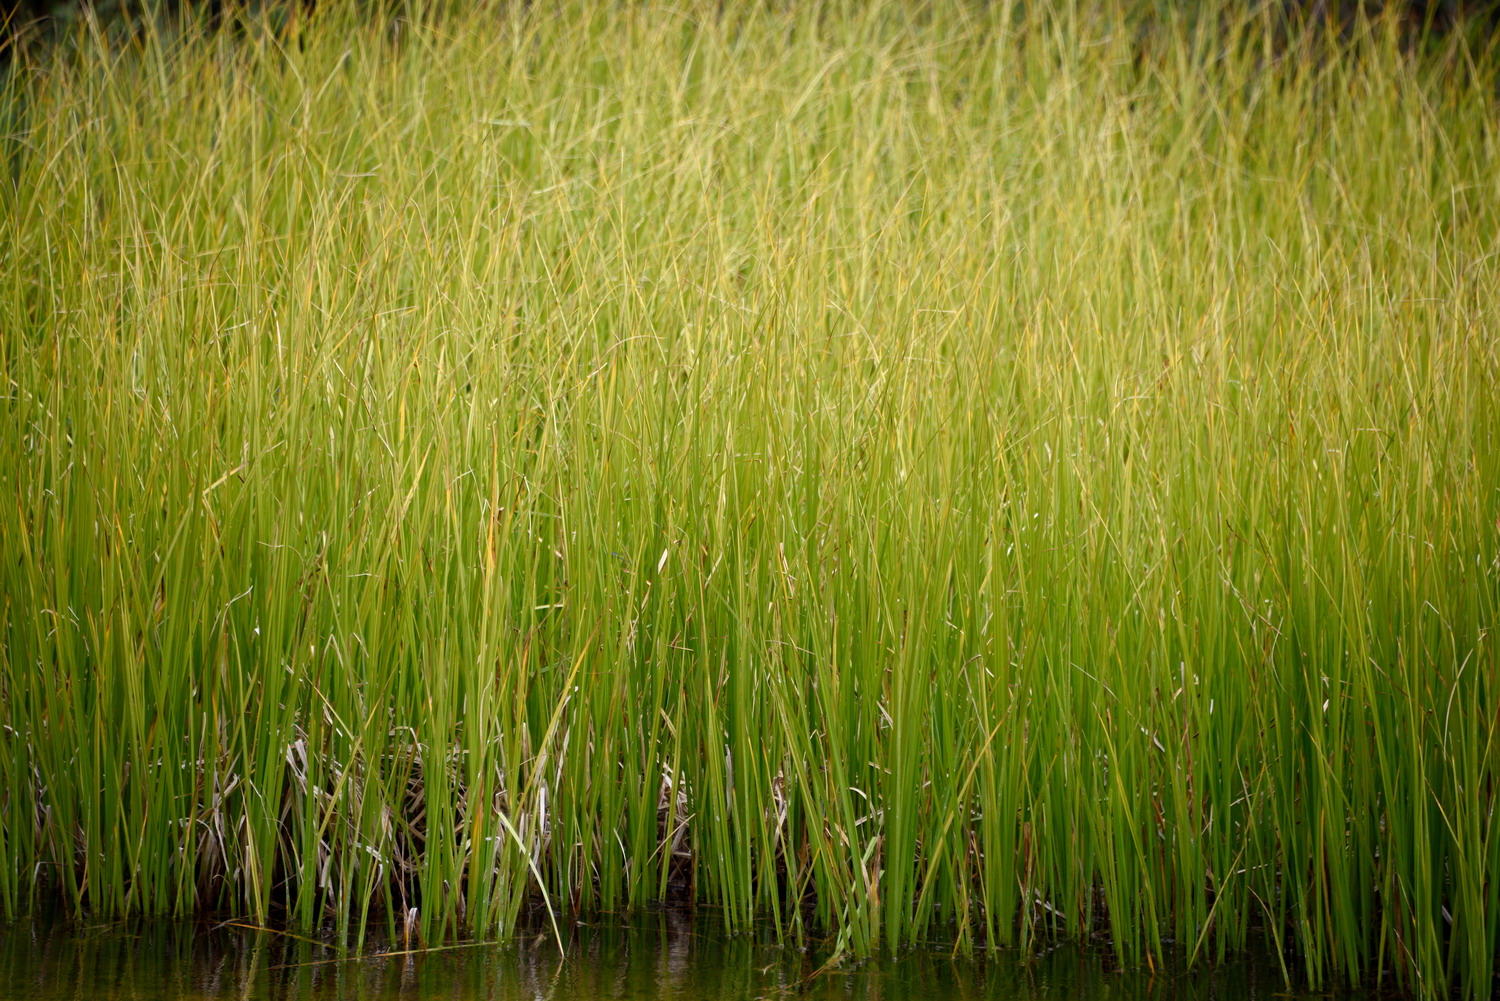 DSC_5443_1A1 - Tundra Pond Grass